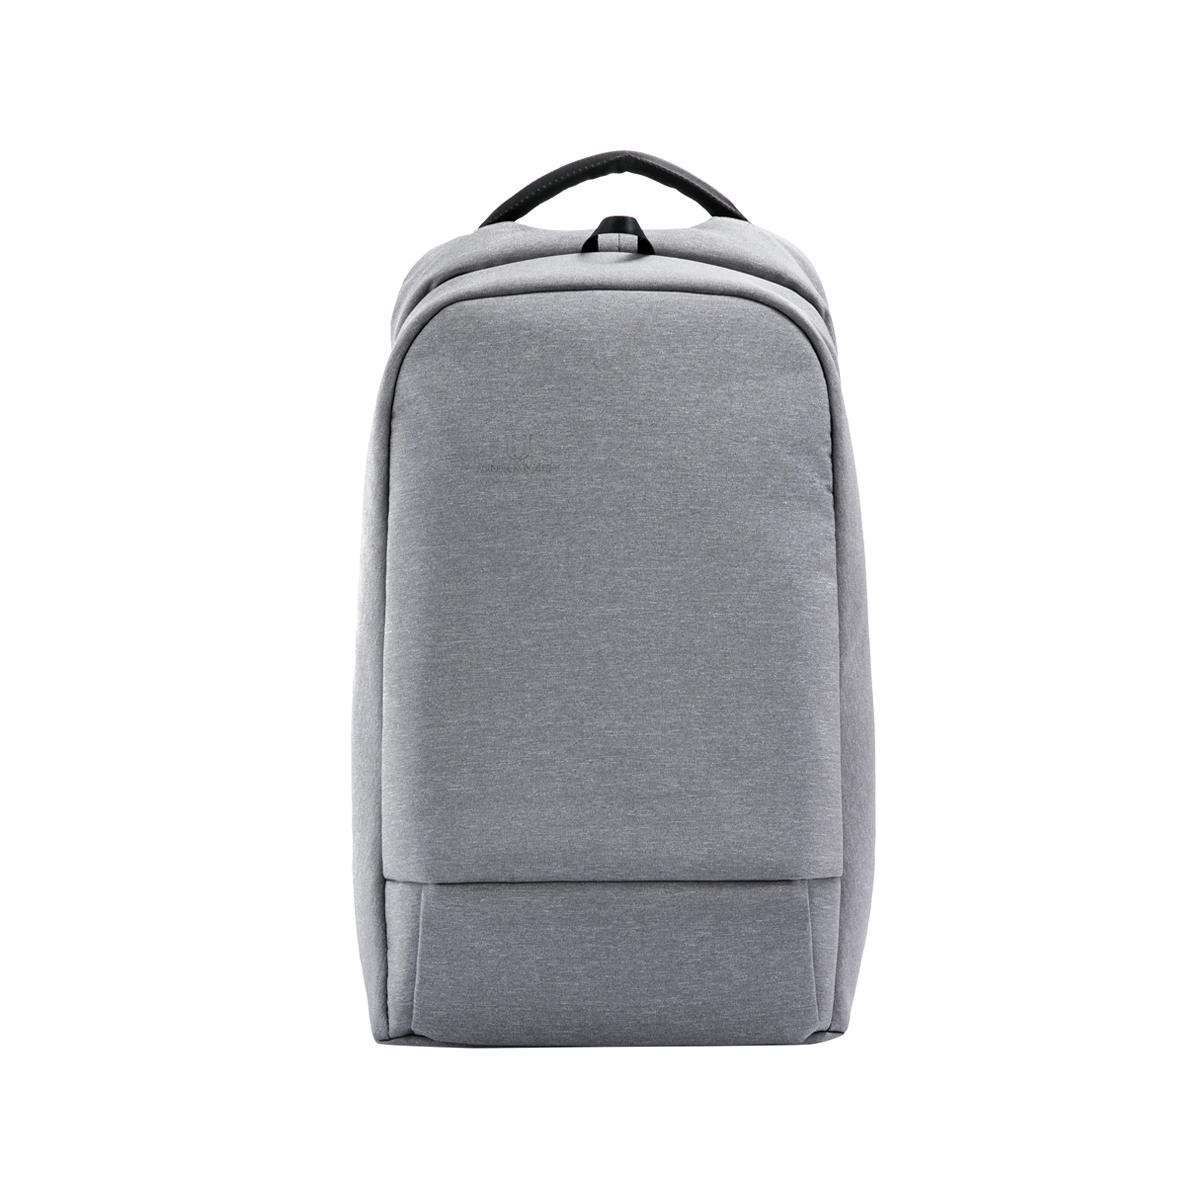 Jordan&judy 18L Anti-theft Shoulder Backpack Rucksack Waterproof 15.6inch Laptop Bag Outdoor Travel